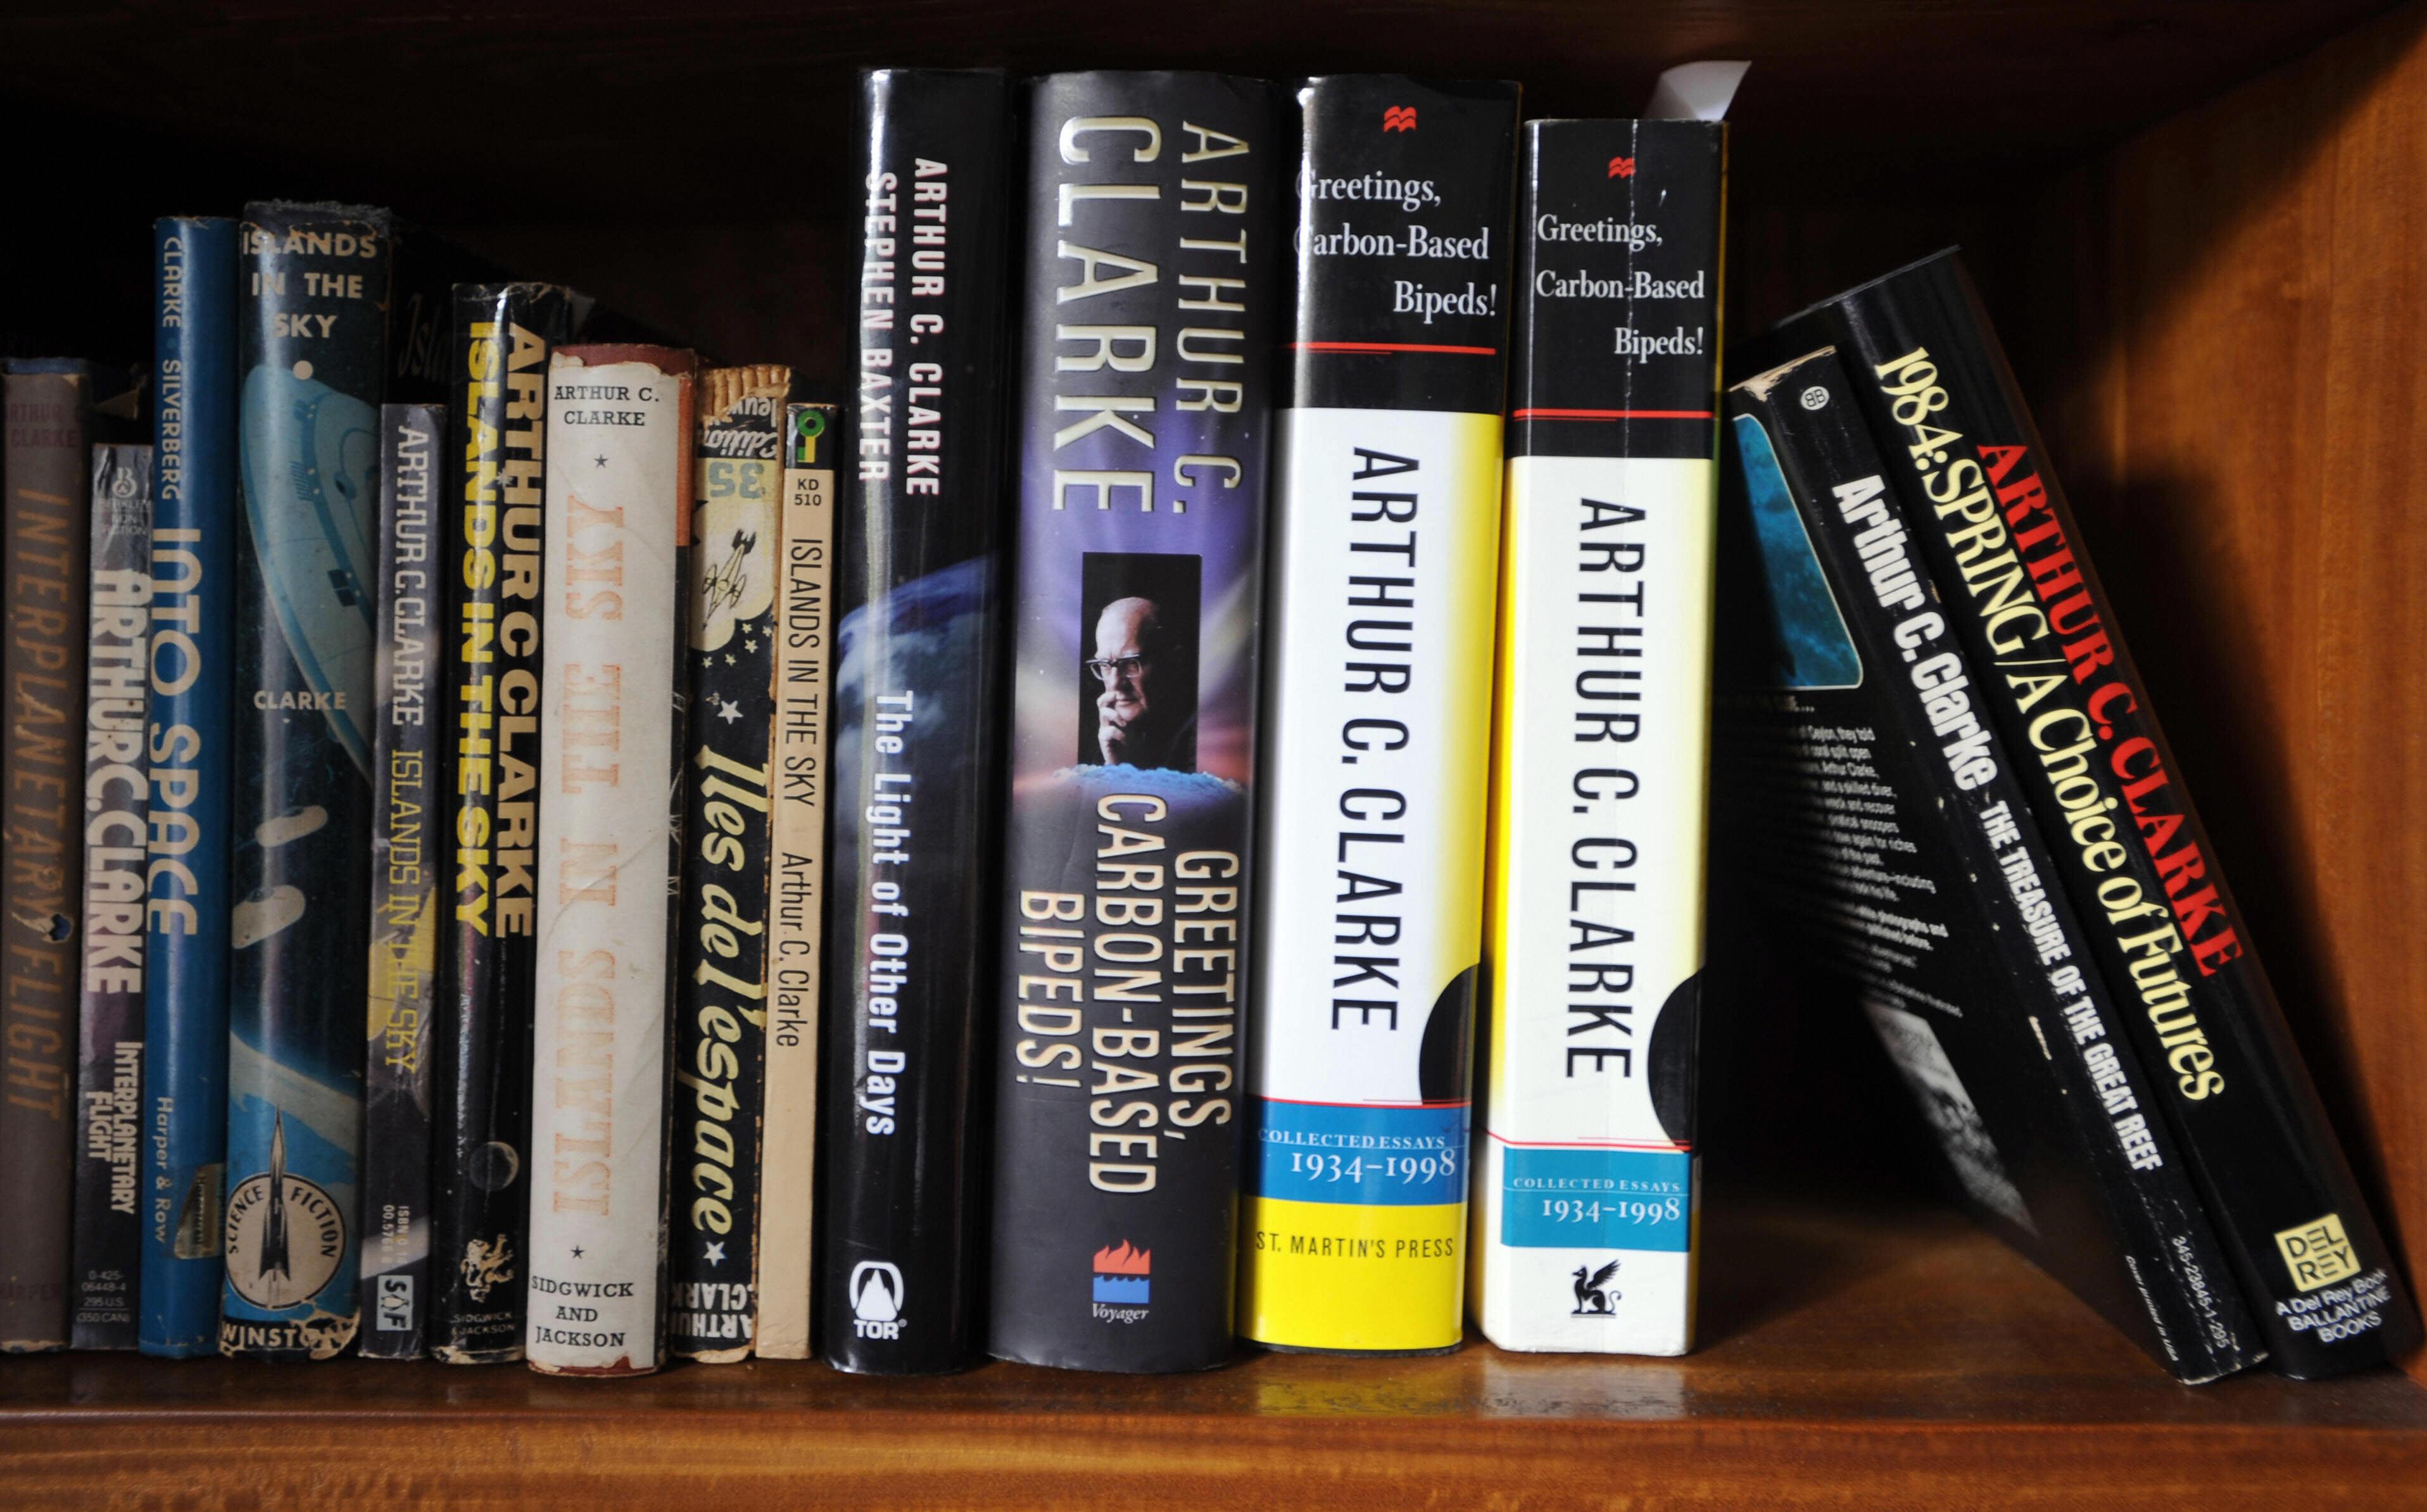 Books written by science fiction author Arthur C. Clarke